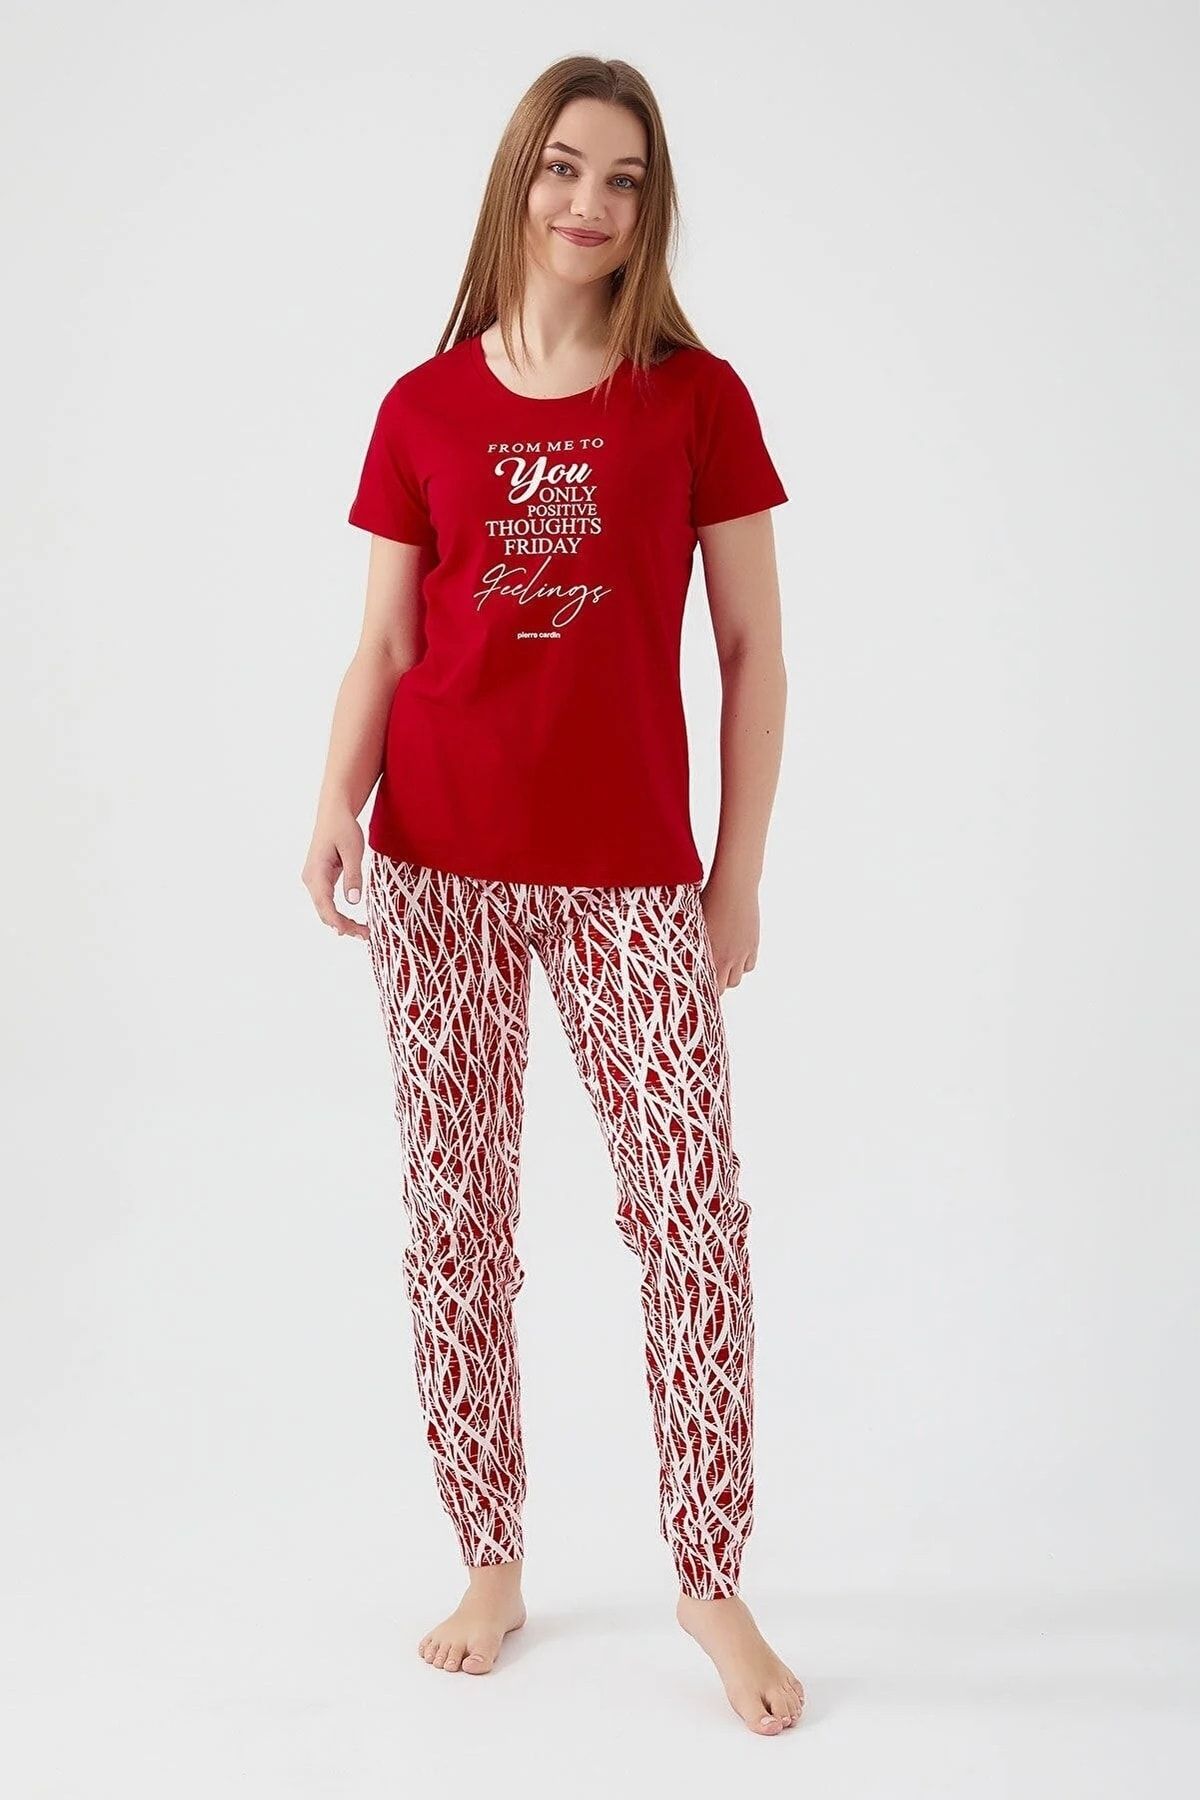 Pierre Cardin Pamuk Kısa Kollu Kadın Pijama Takım 8611